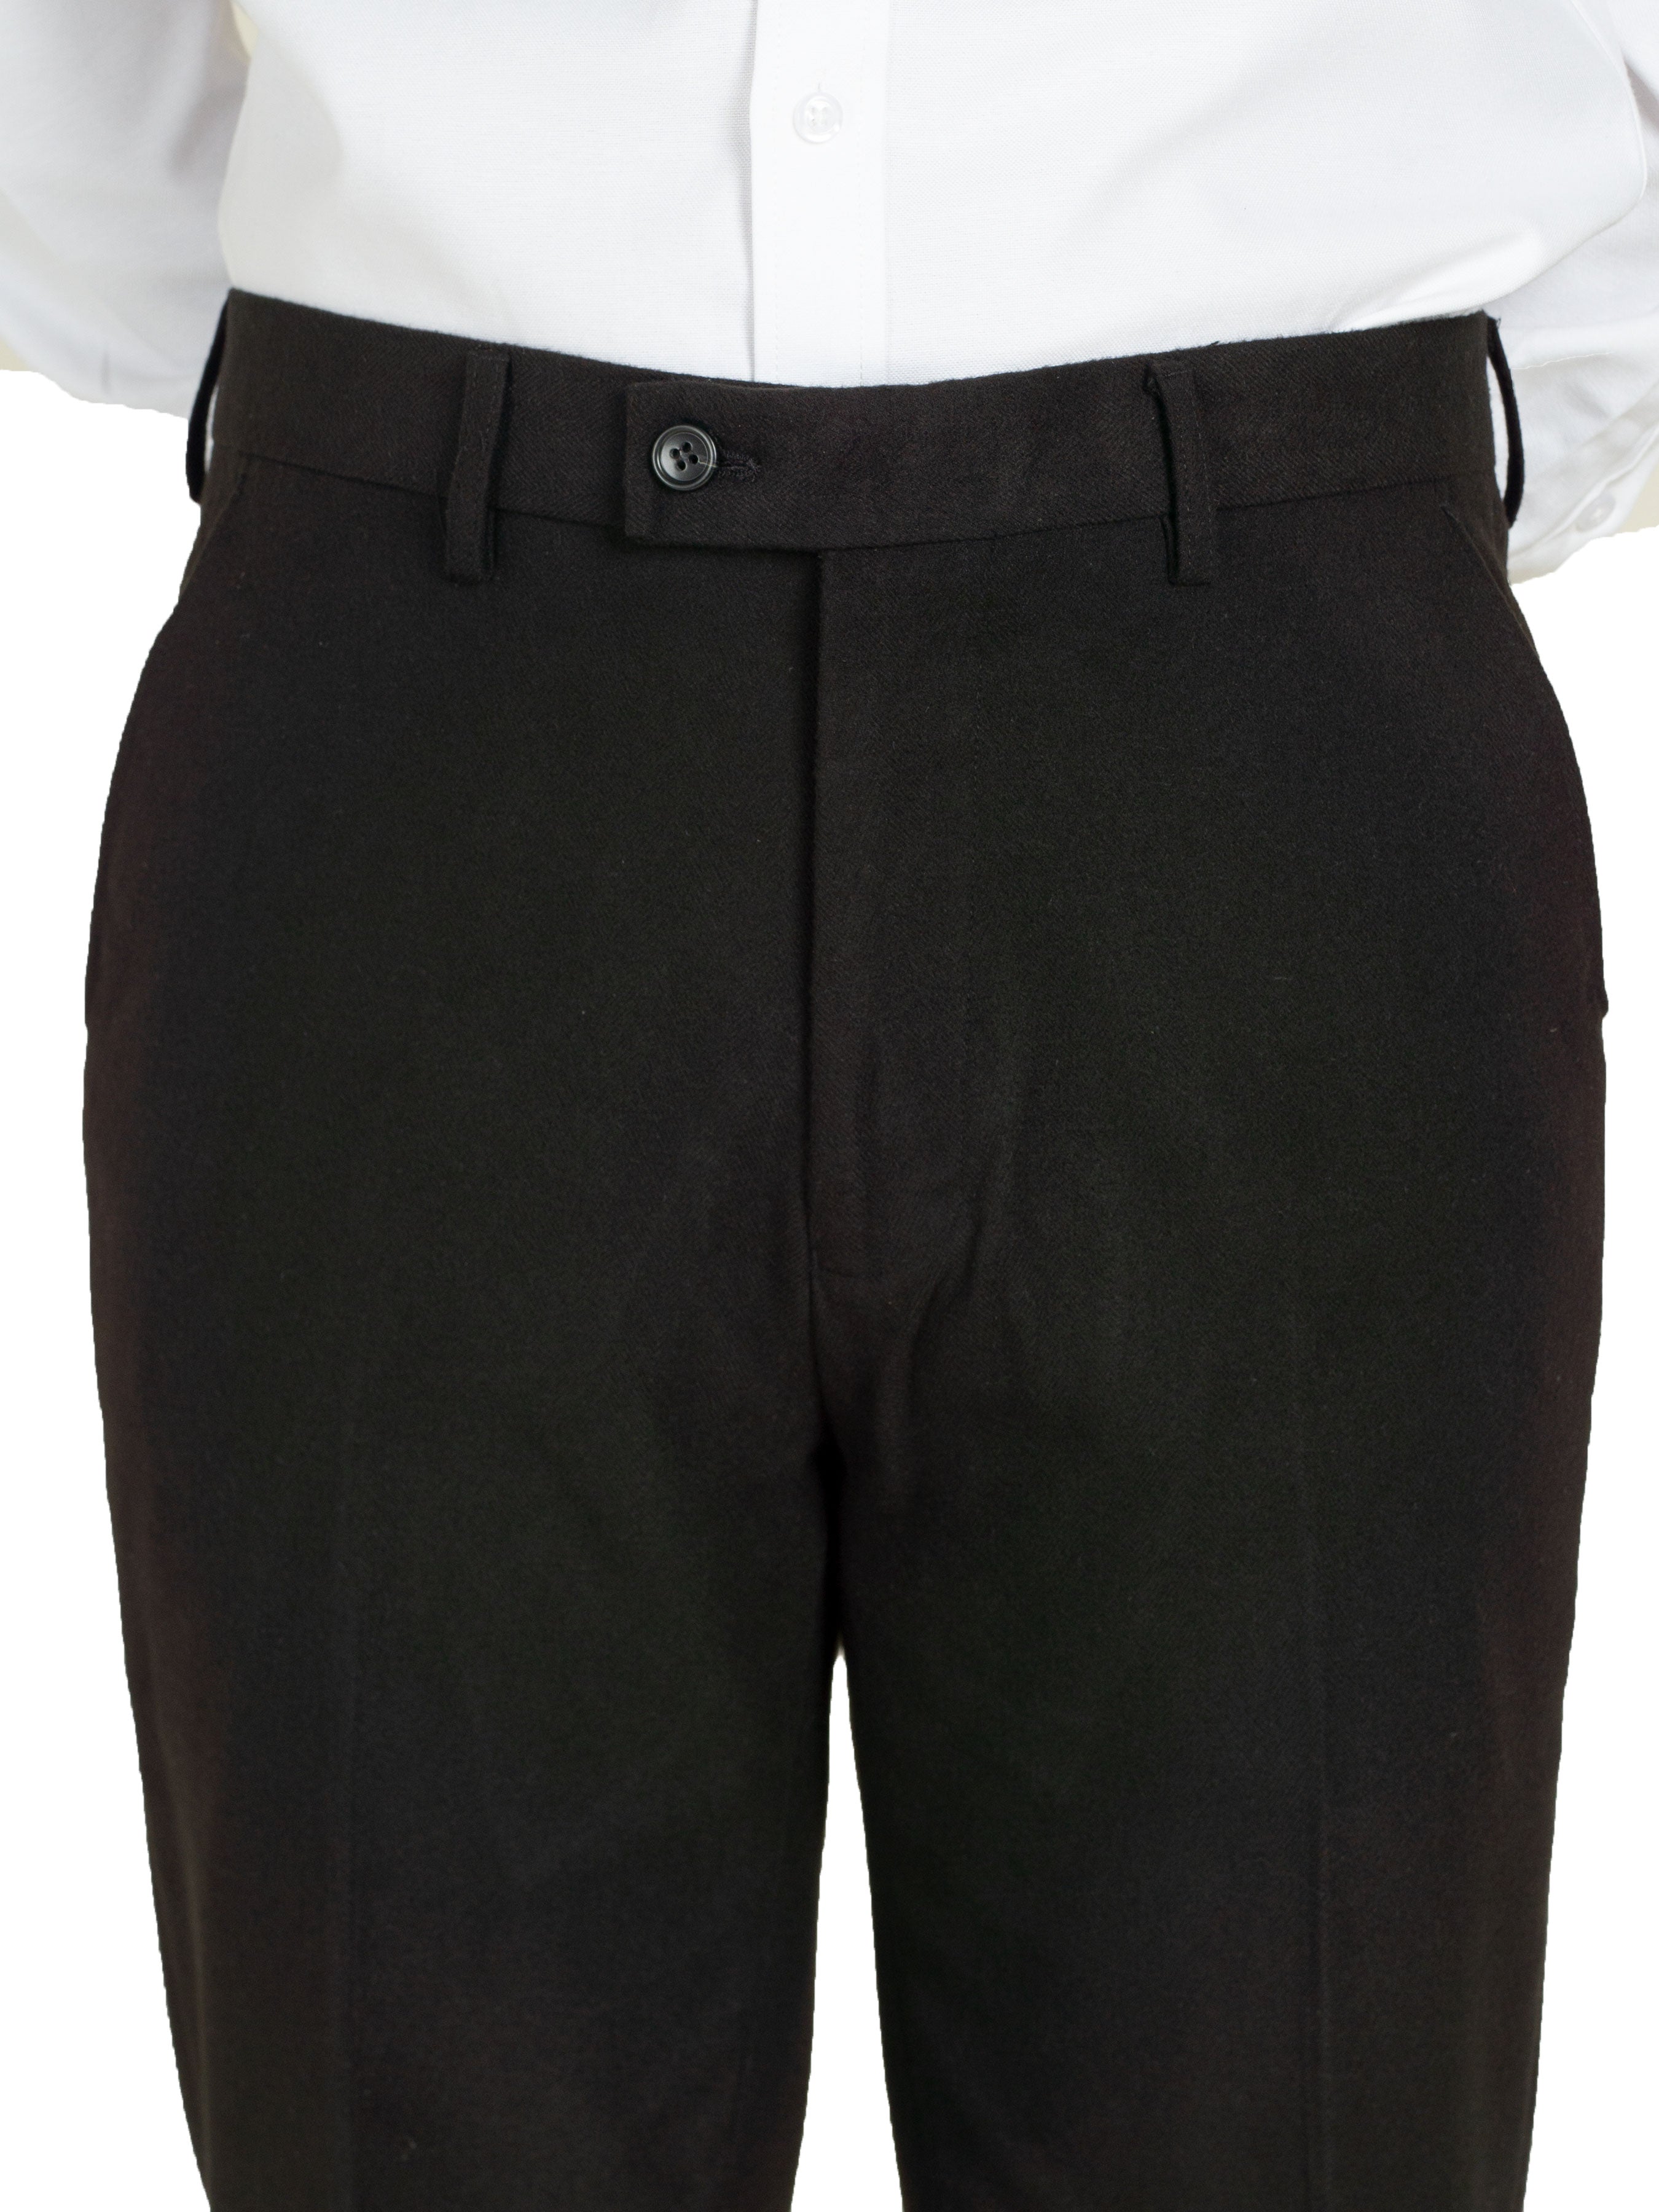 Trousers With Belt Loop -  Black Herringbone (Stretchable) - Zeve Shoes